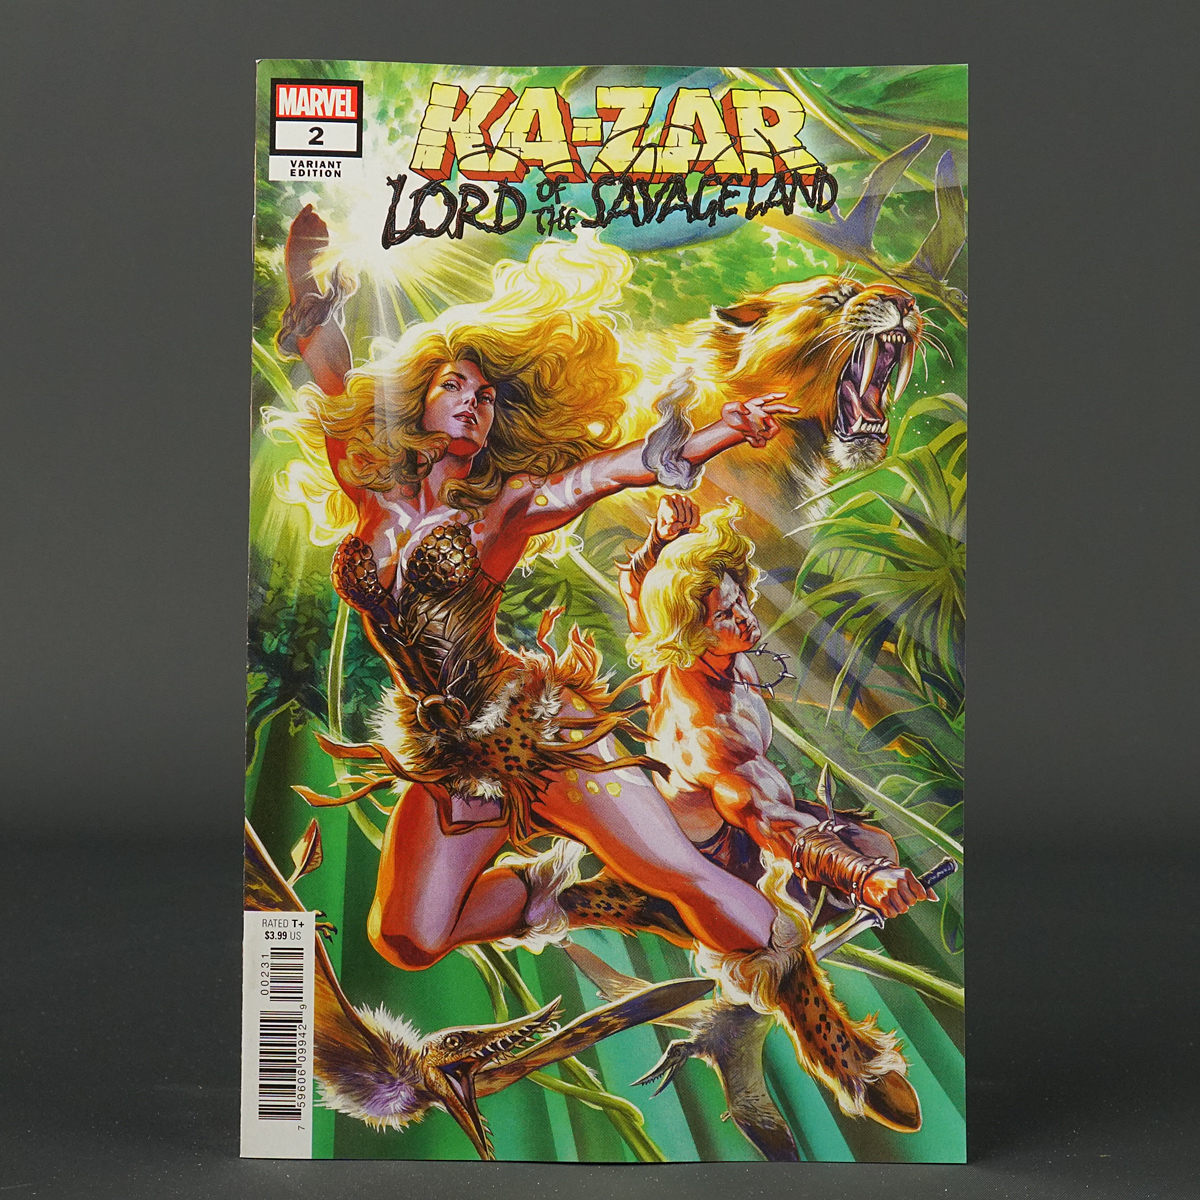 KA-ZAR LORD SAVAGE LAND #2 var Marvel Comics 2021 AUG211112 (CA) Massafera (W) Thompson (A) Garcia